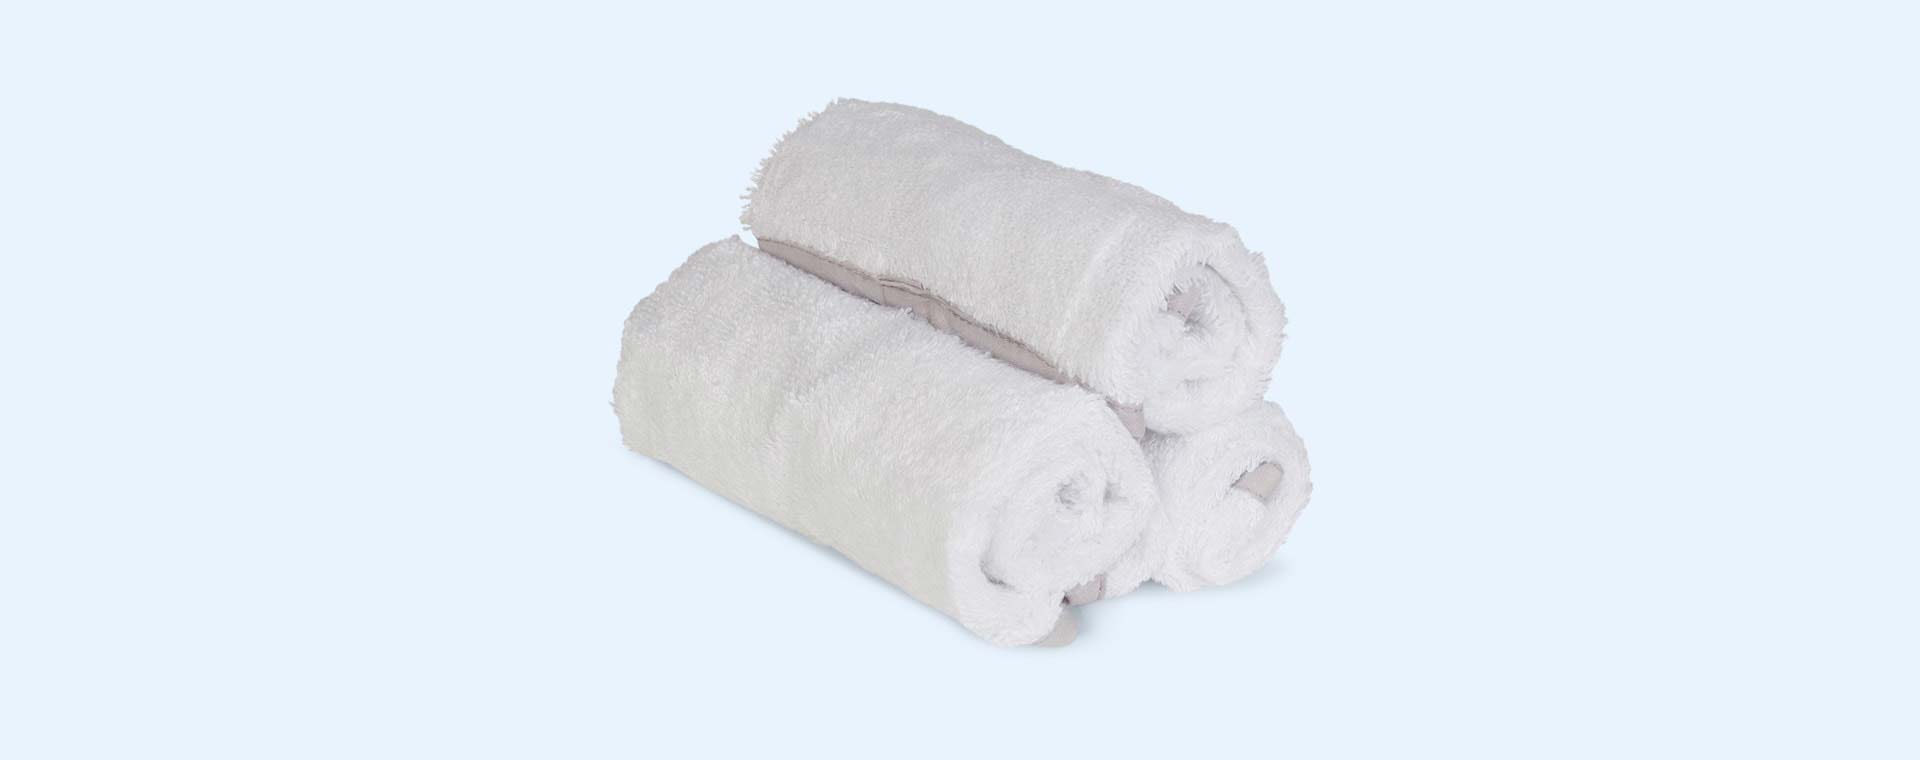 White Shnuggle Baby Washcloths - 3 Pack